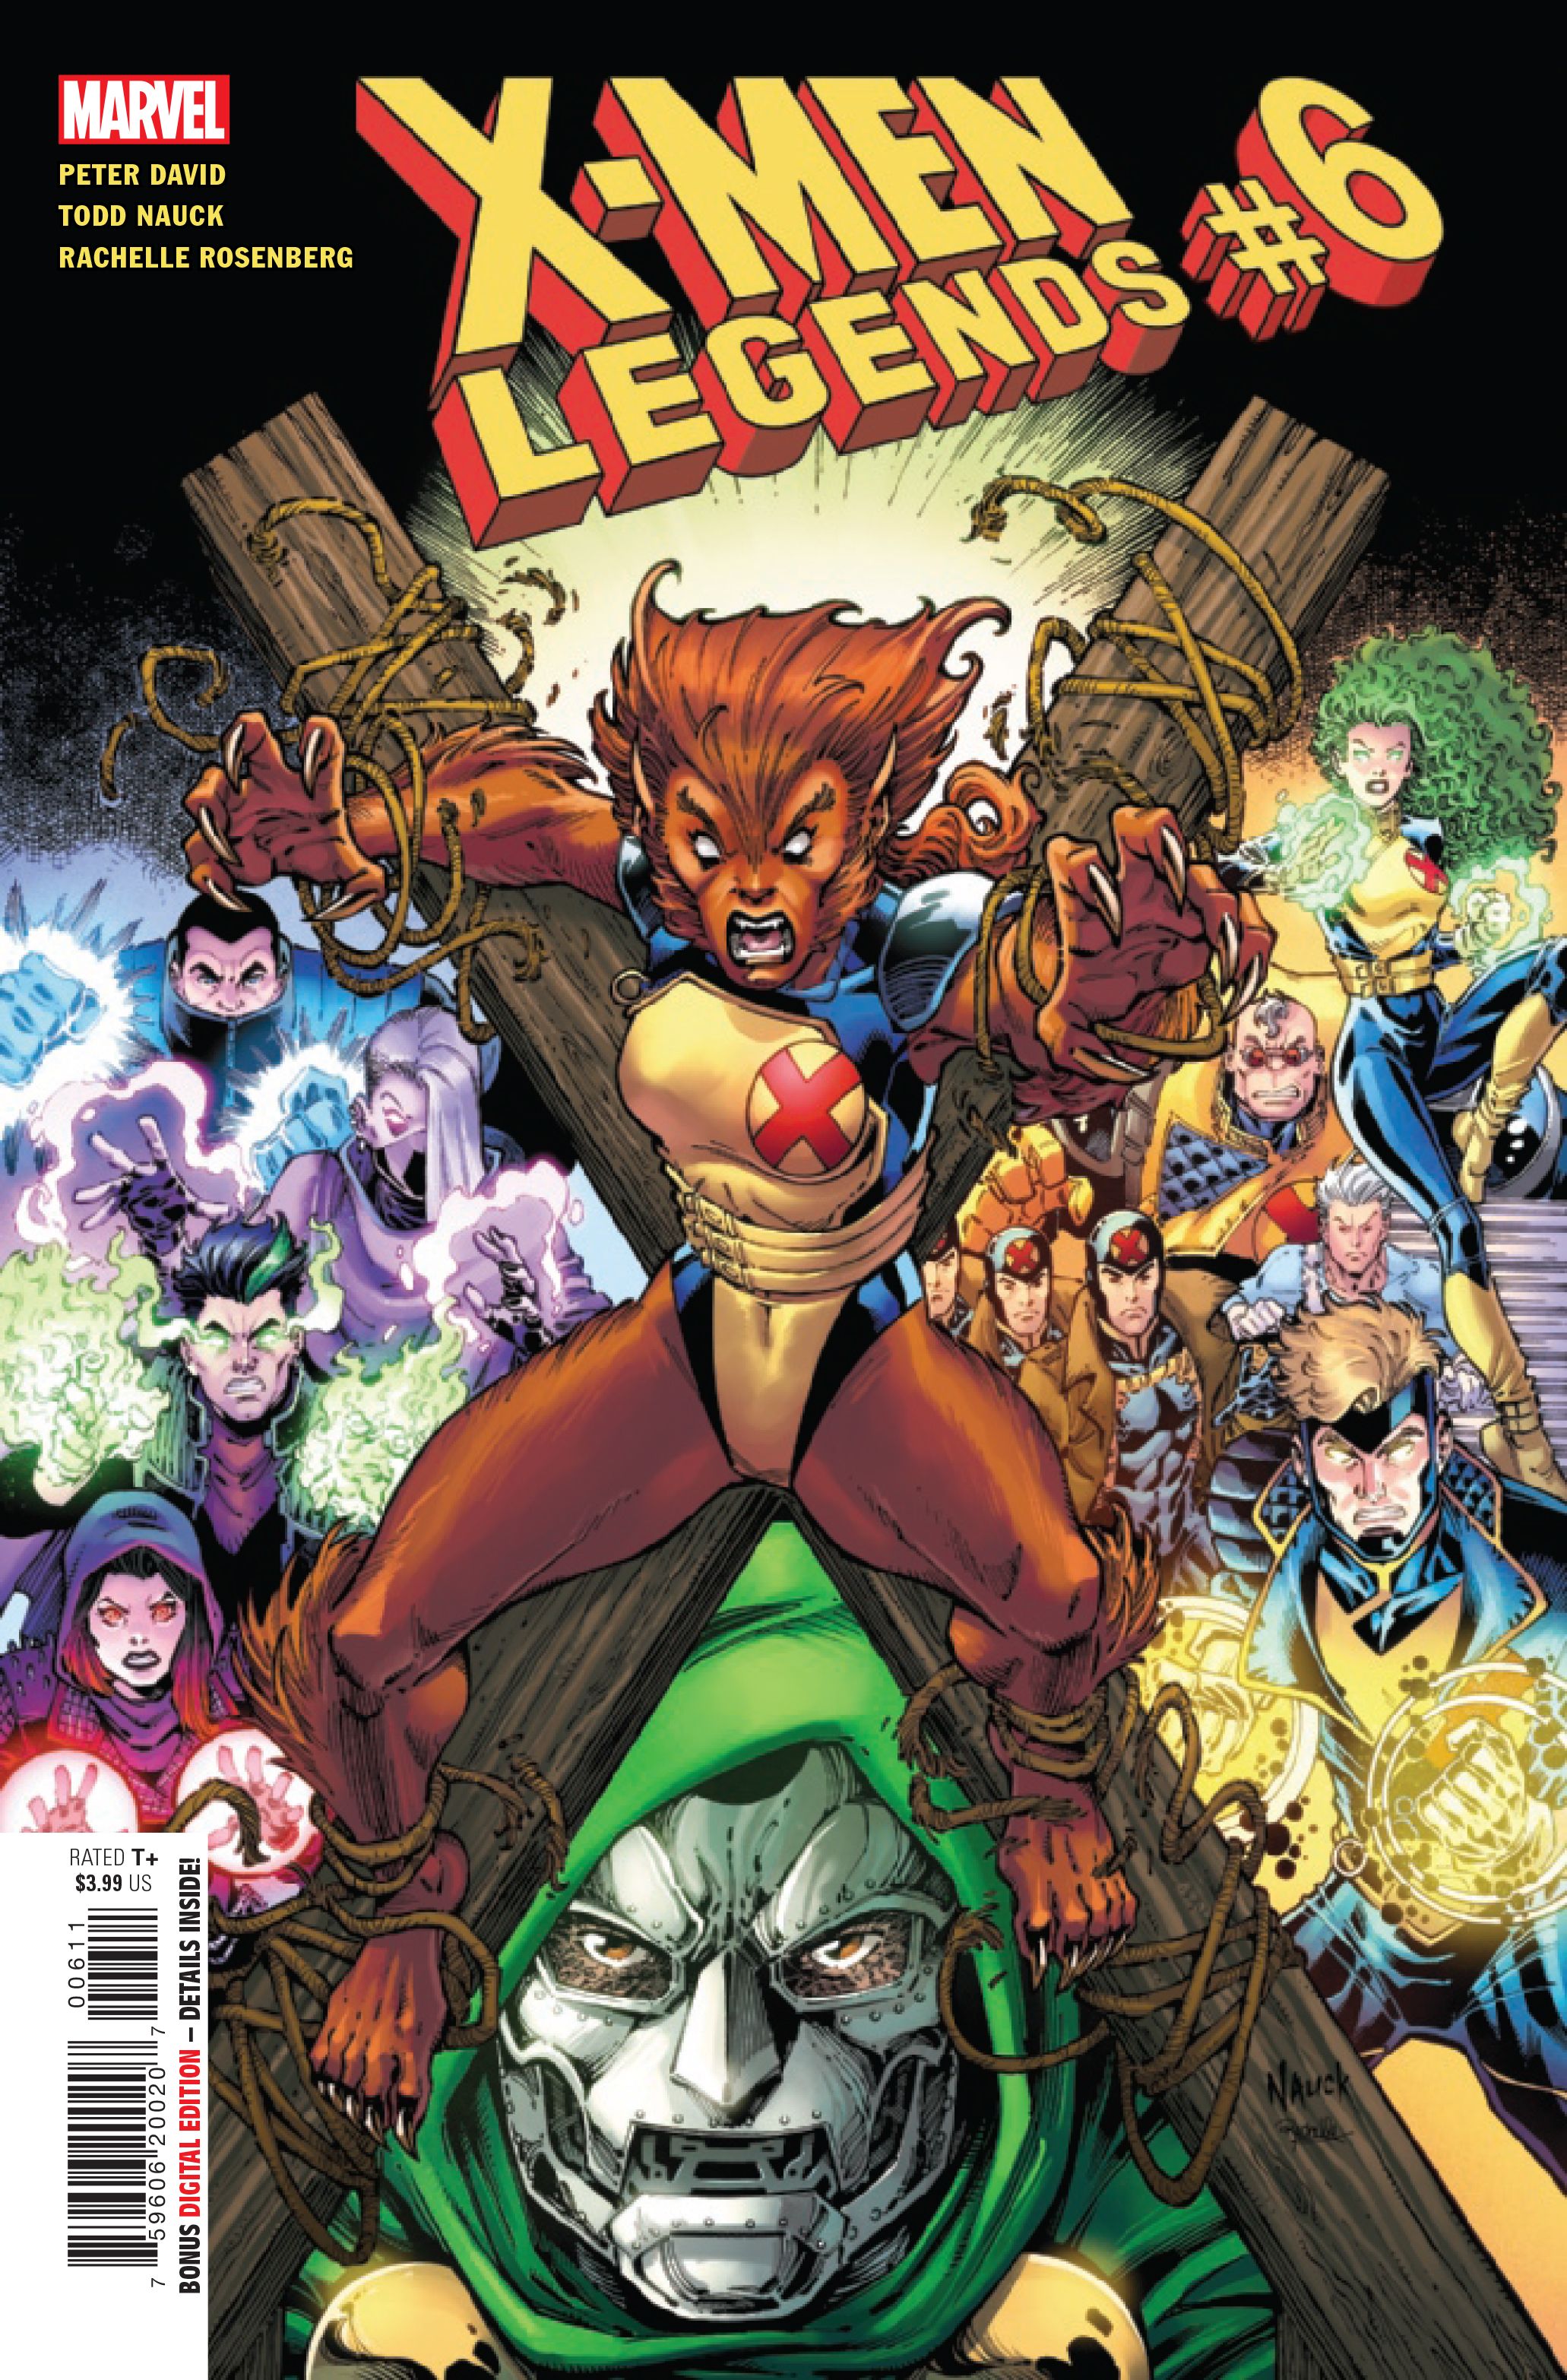 Cover for X-Men Legends #6, by Peter David, Todd Nauck, Rachelle Rosenberg and VC's Joe Caramagna.